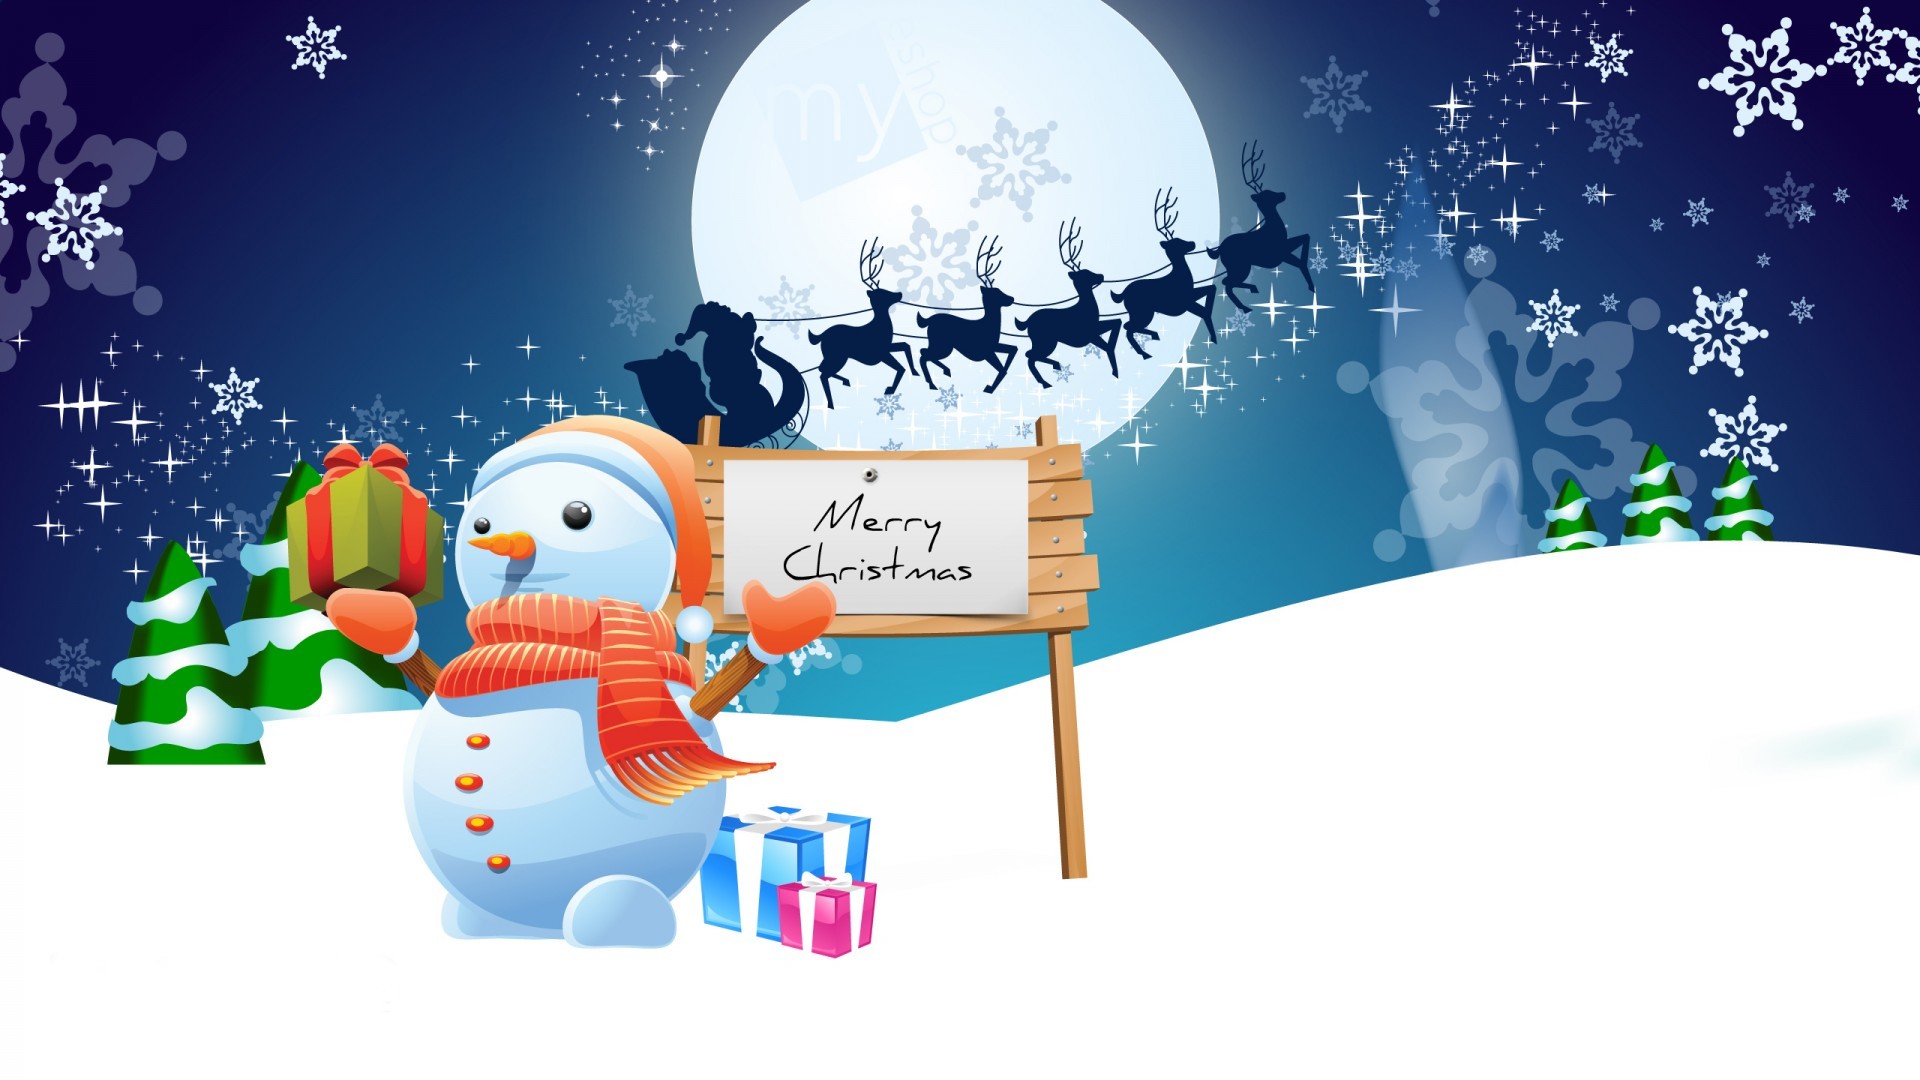 1920x1080 ... x 1080 2560 x 1440 Original. Description: Download Snowman Merry Christmas  Christmas wallpaper ...